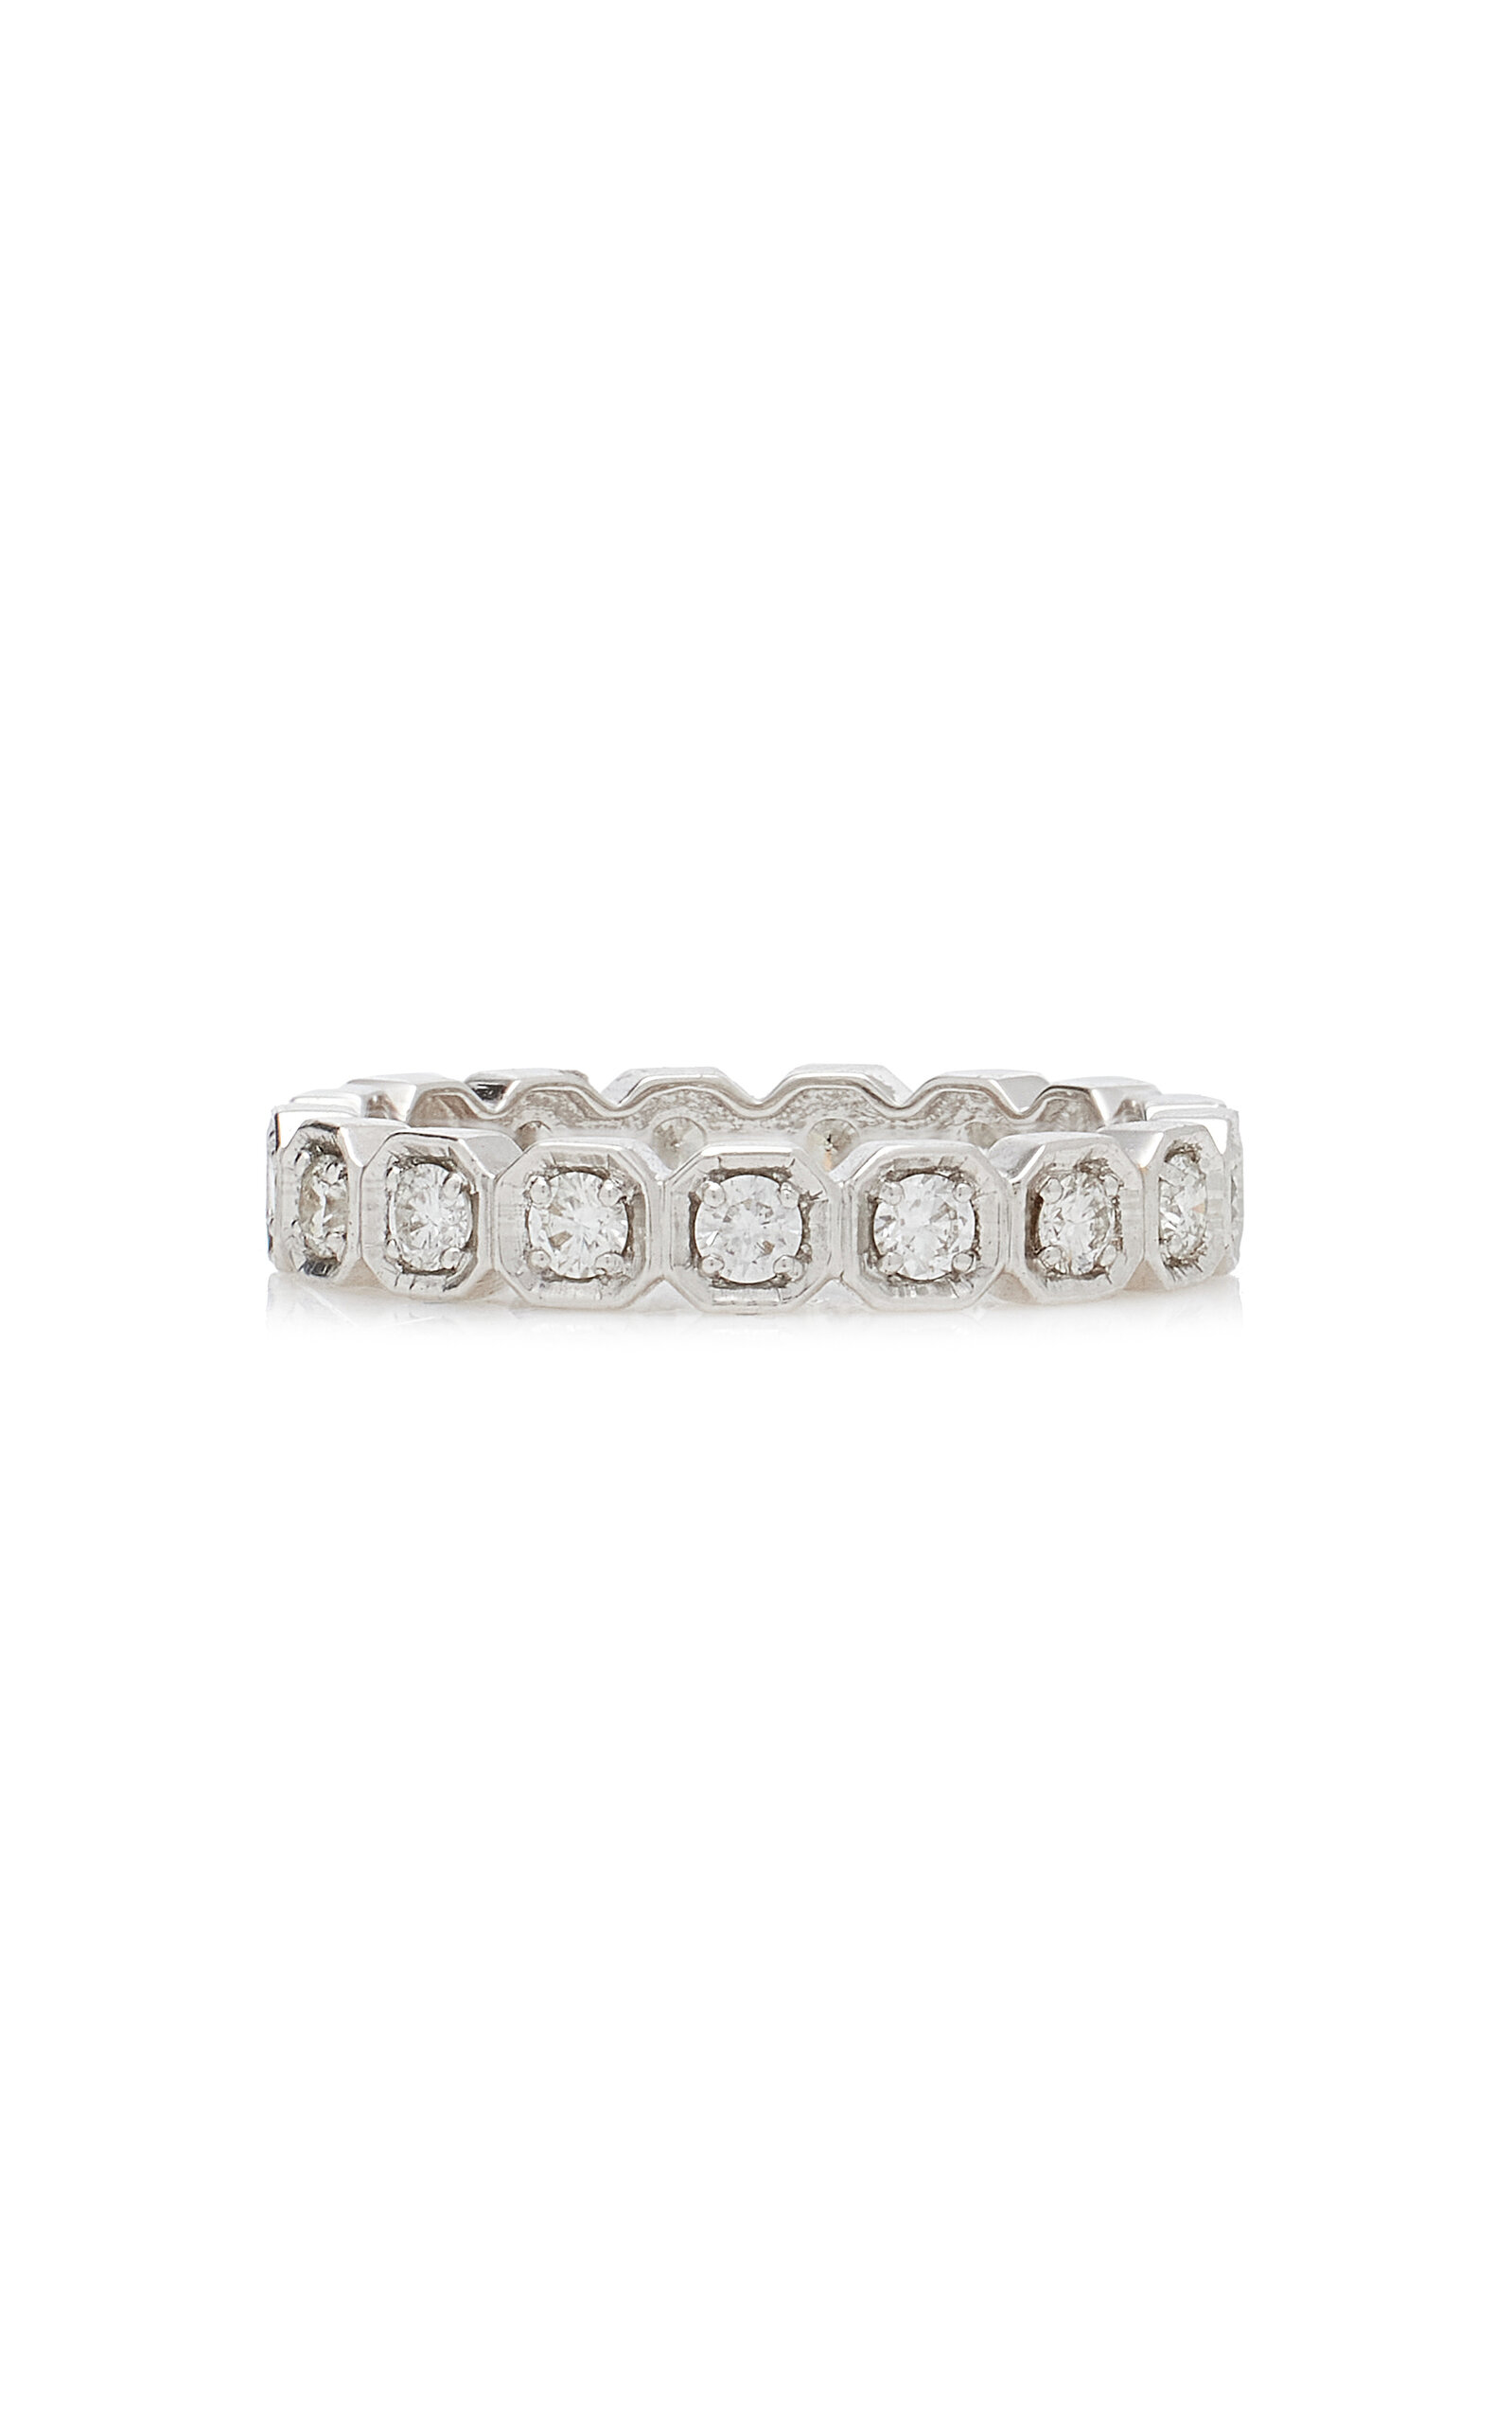 The Eva 18K White Gold Diamond Ring